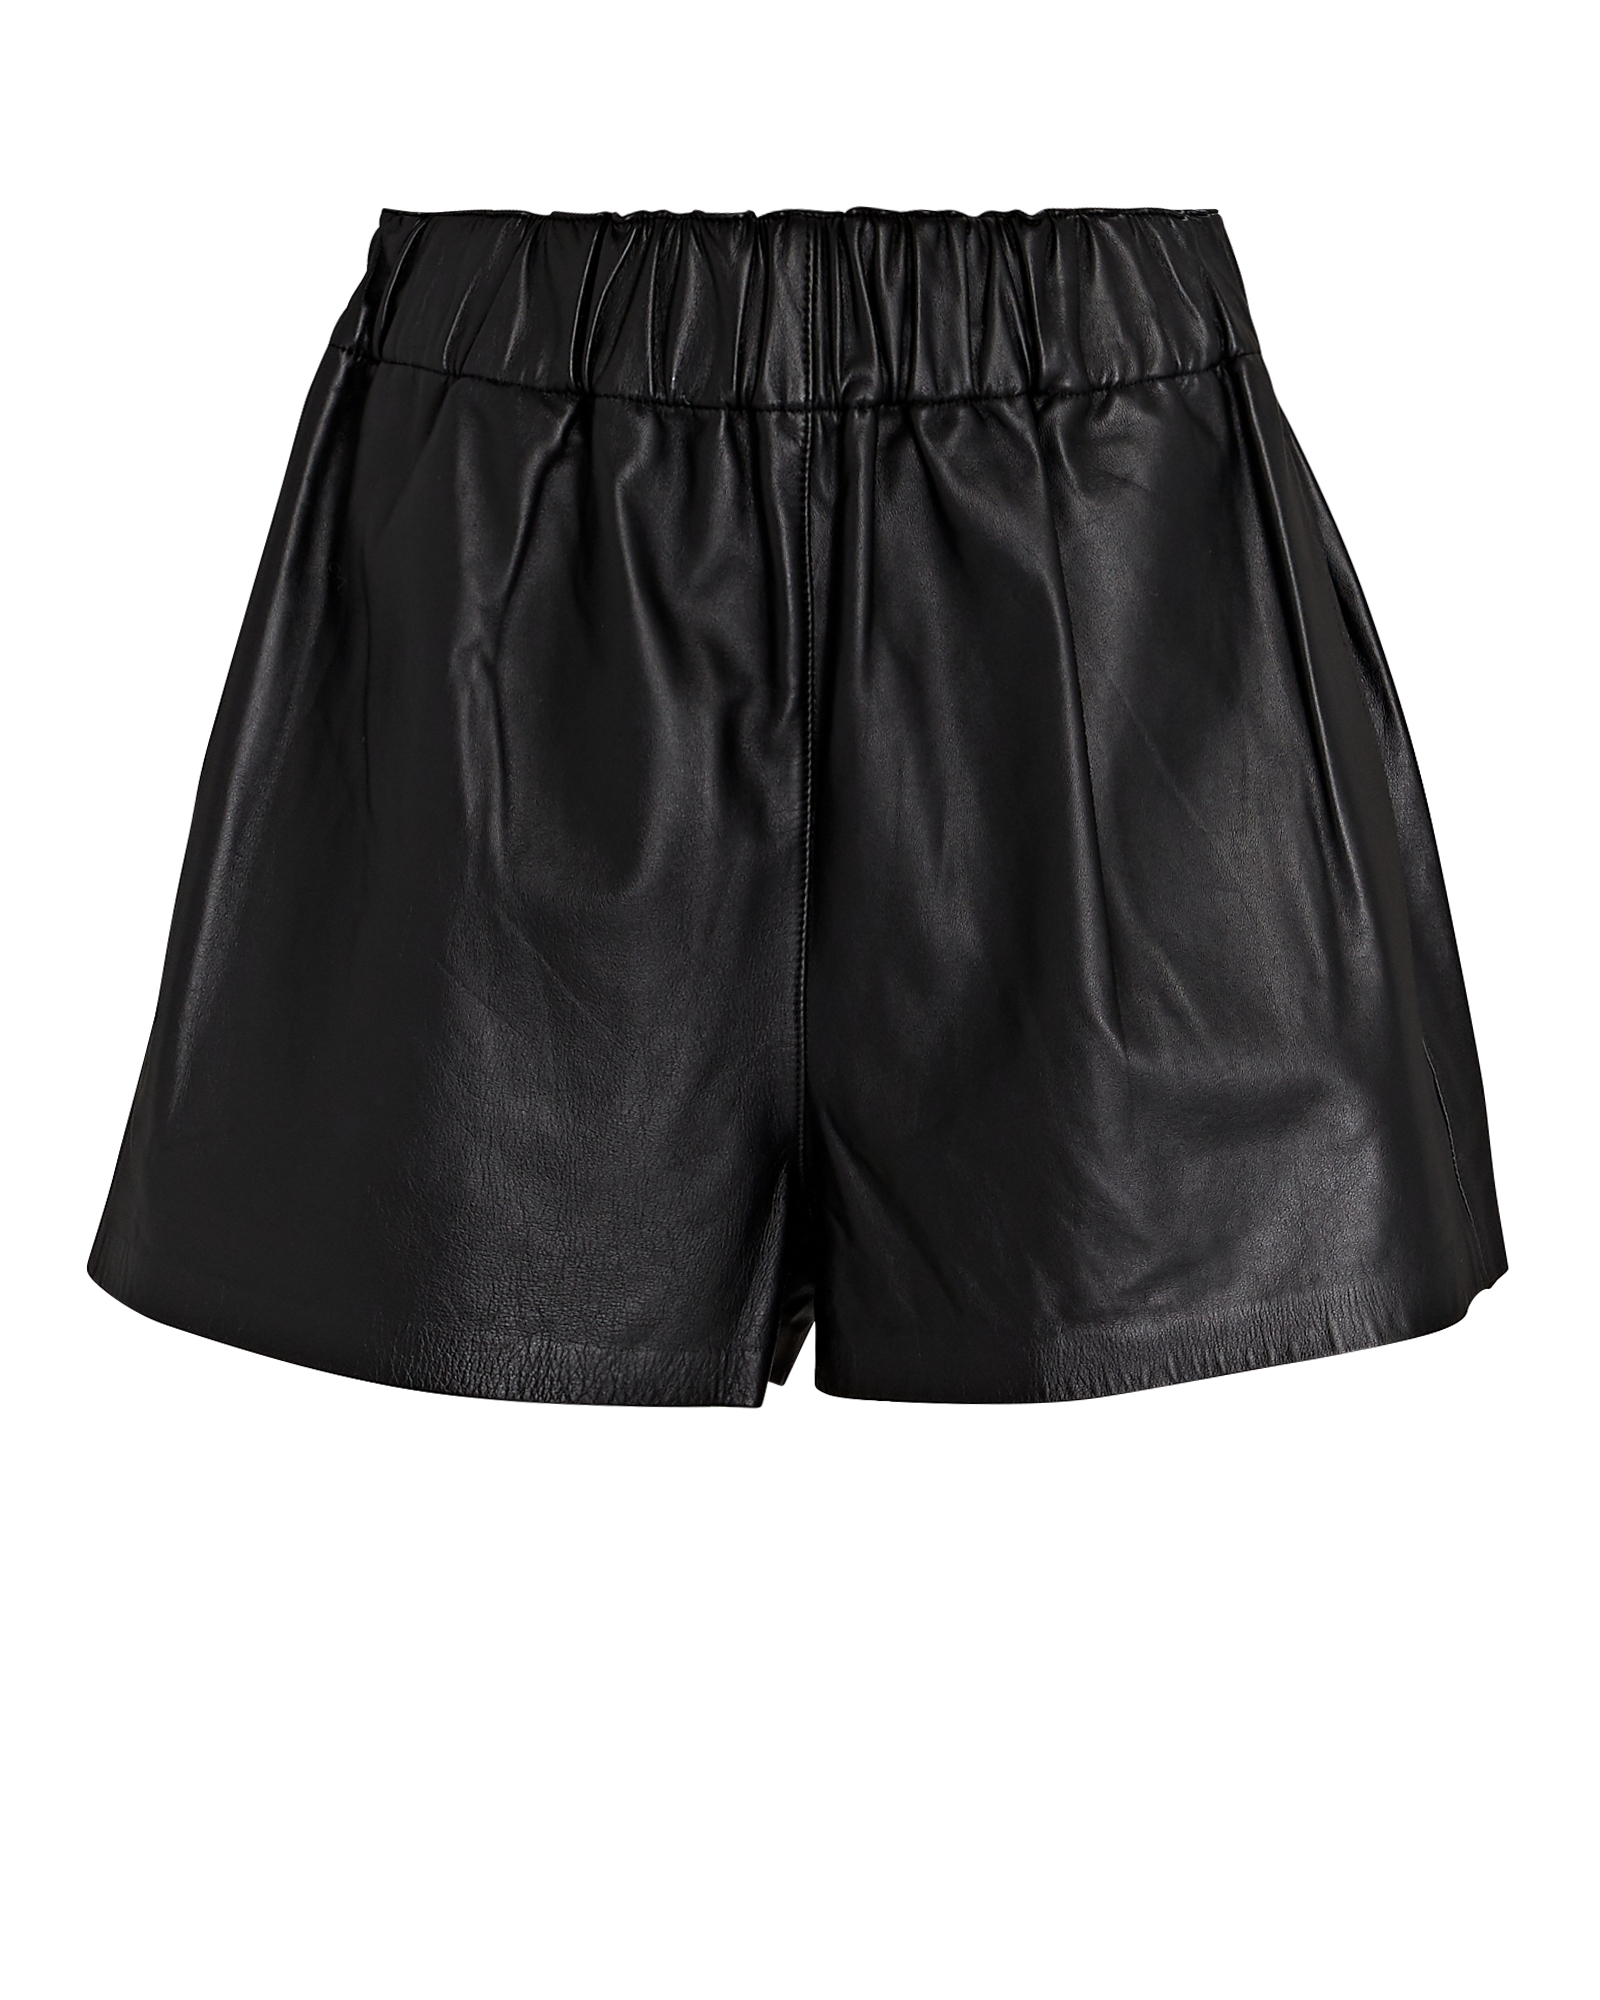 Tibi Leather Pull-On Shorts | INTERMIX®